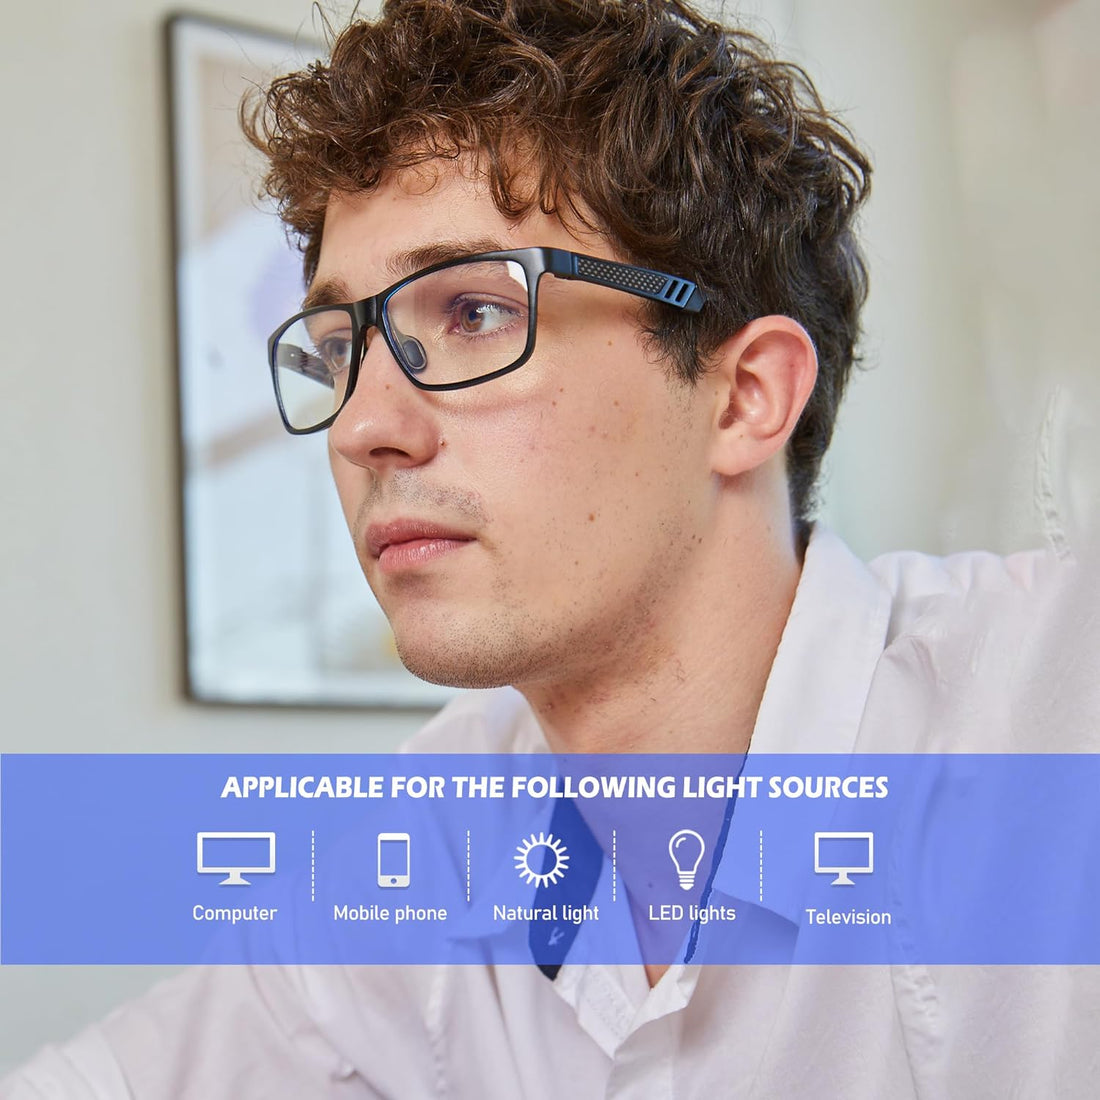 ANYLUV Blue Light Blocking Glasses - Computer Reading Glasses for Men Women - Anti Glare/Scratch/Smudgy Safey Screen Eyewear…